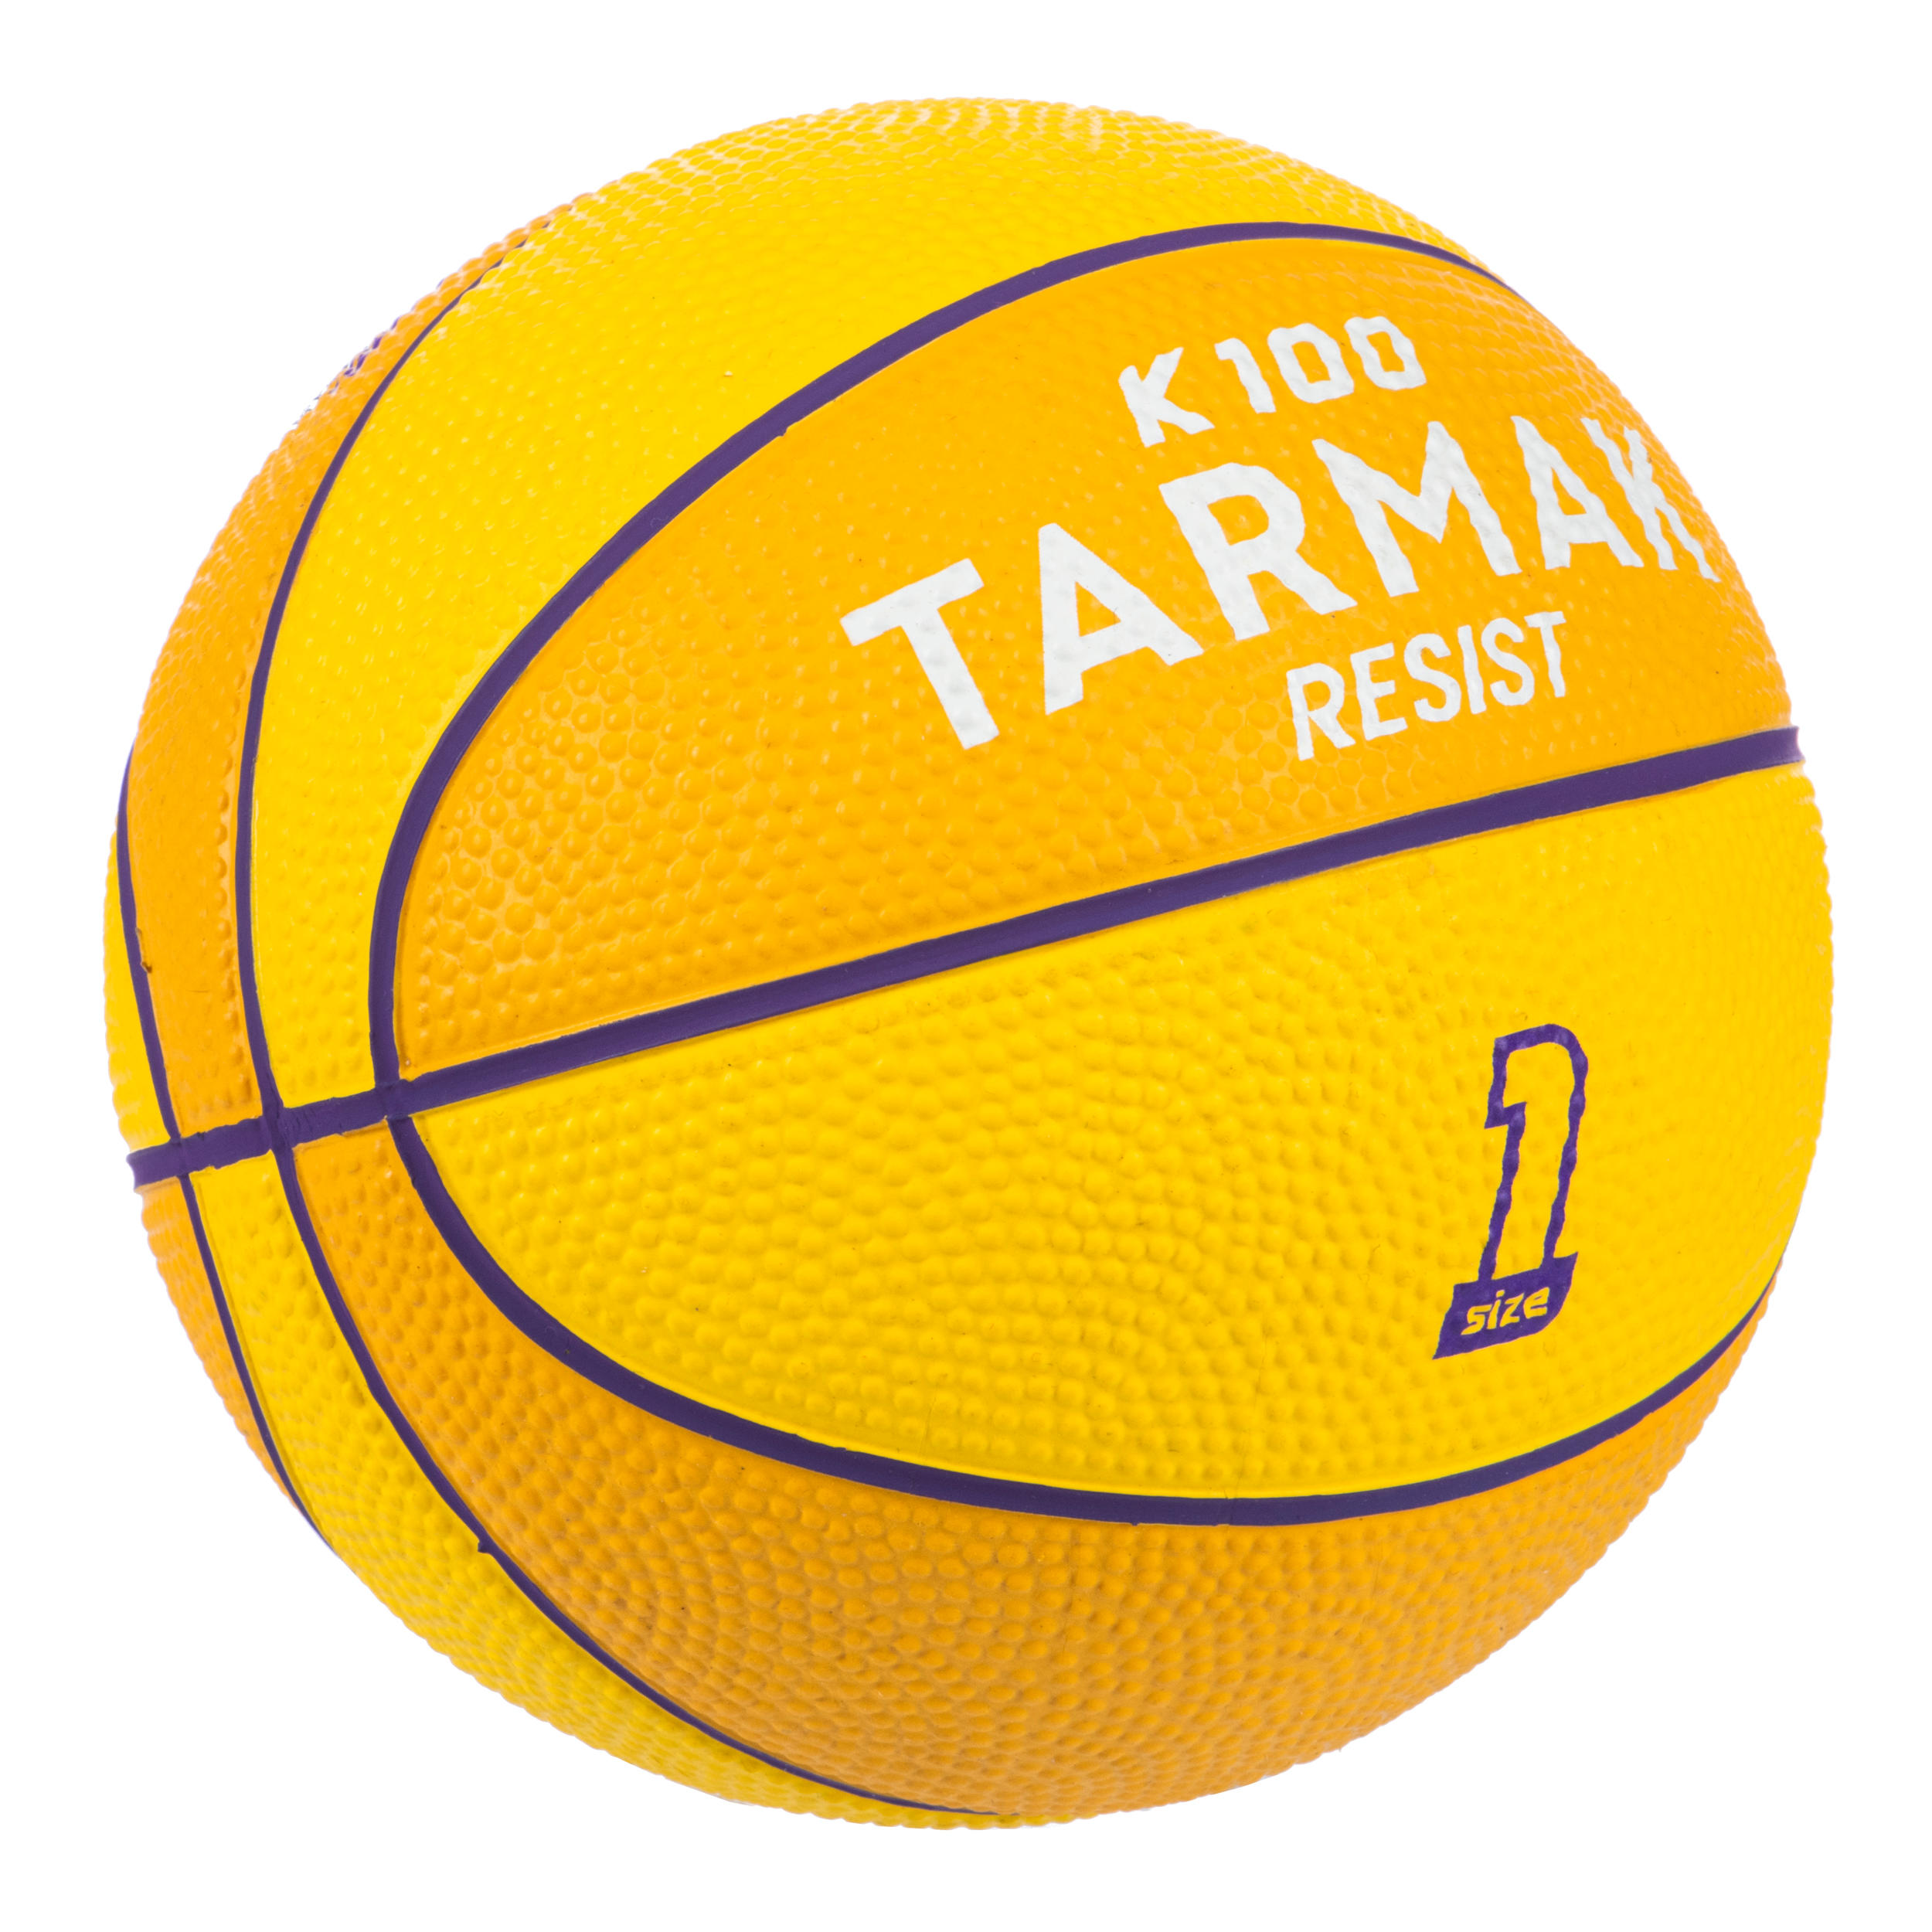 Mini-basketboll i Gummi Storlek 1 K100 Junior Gul